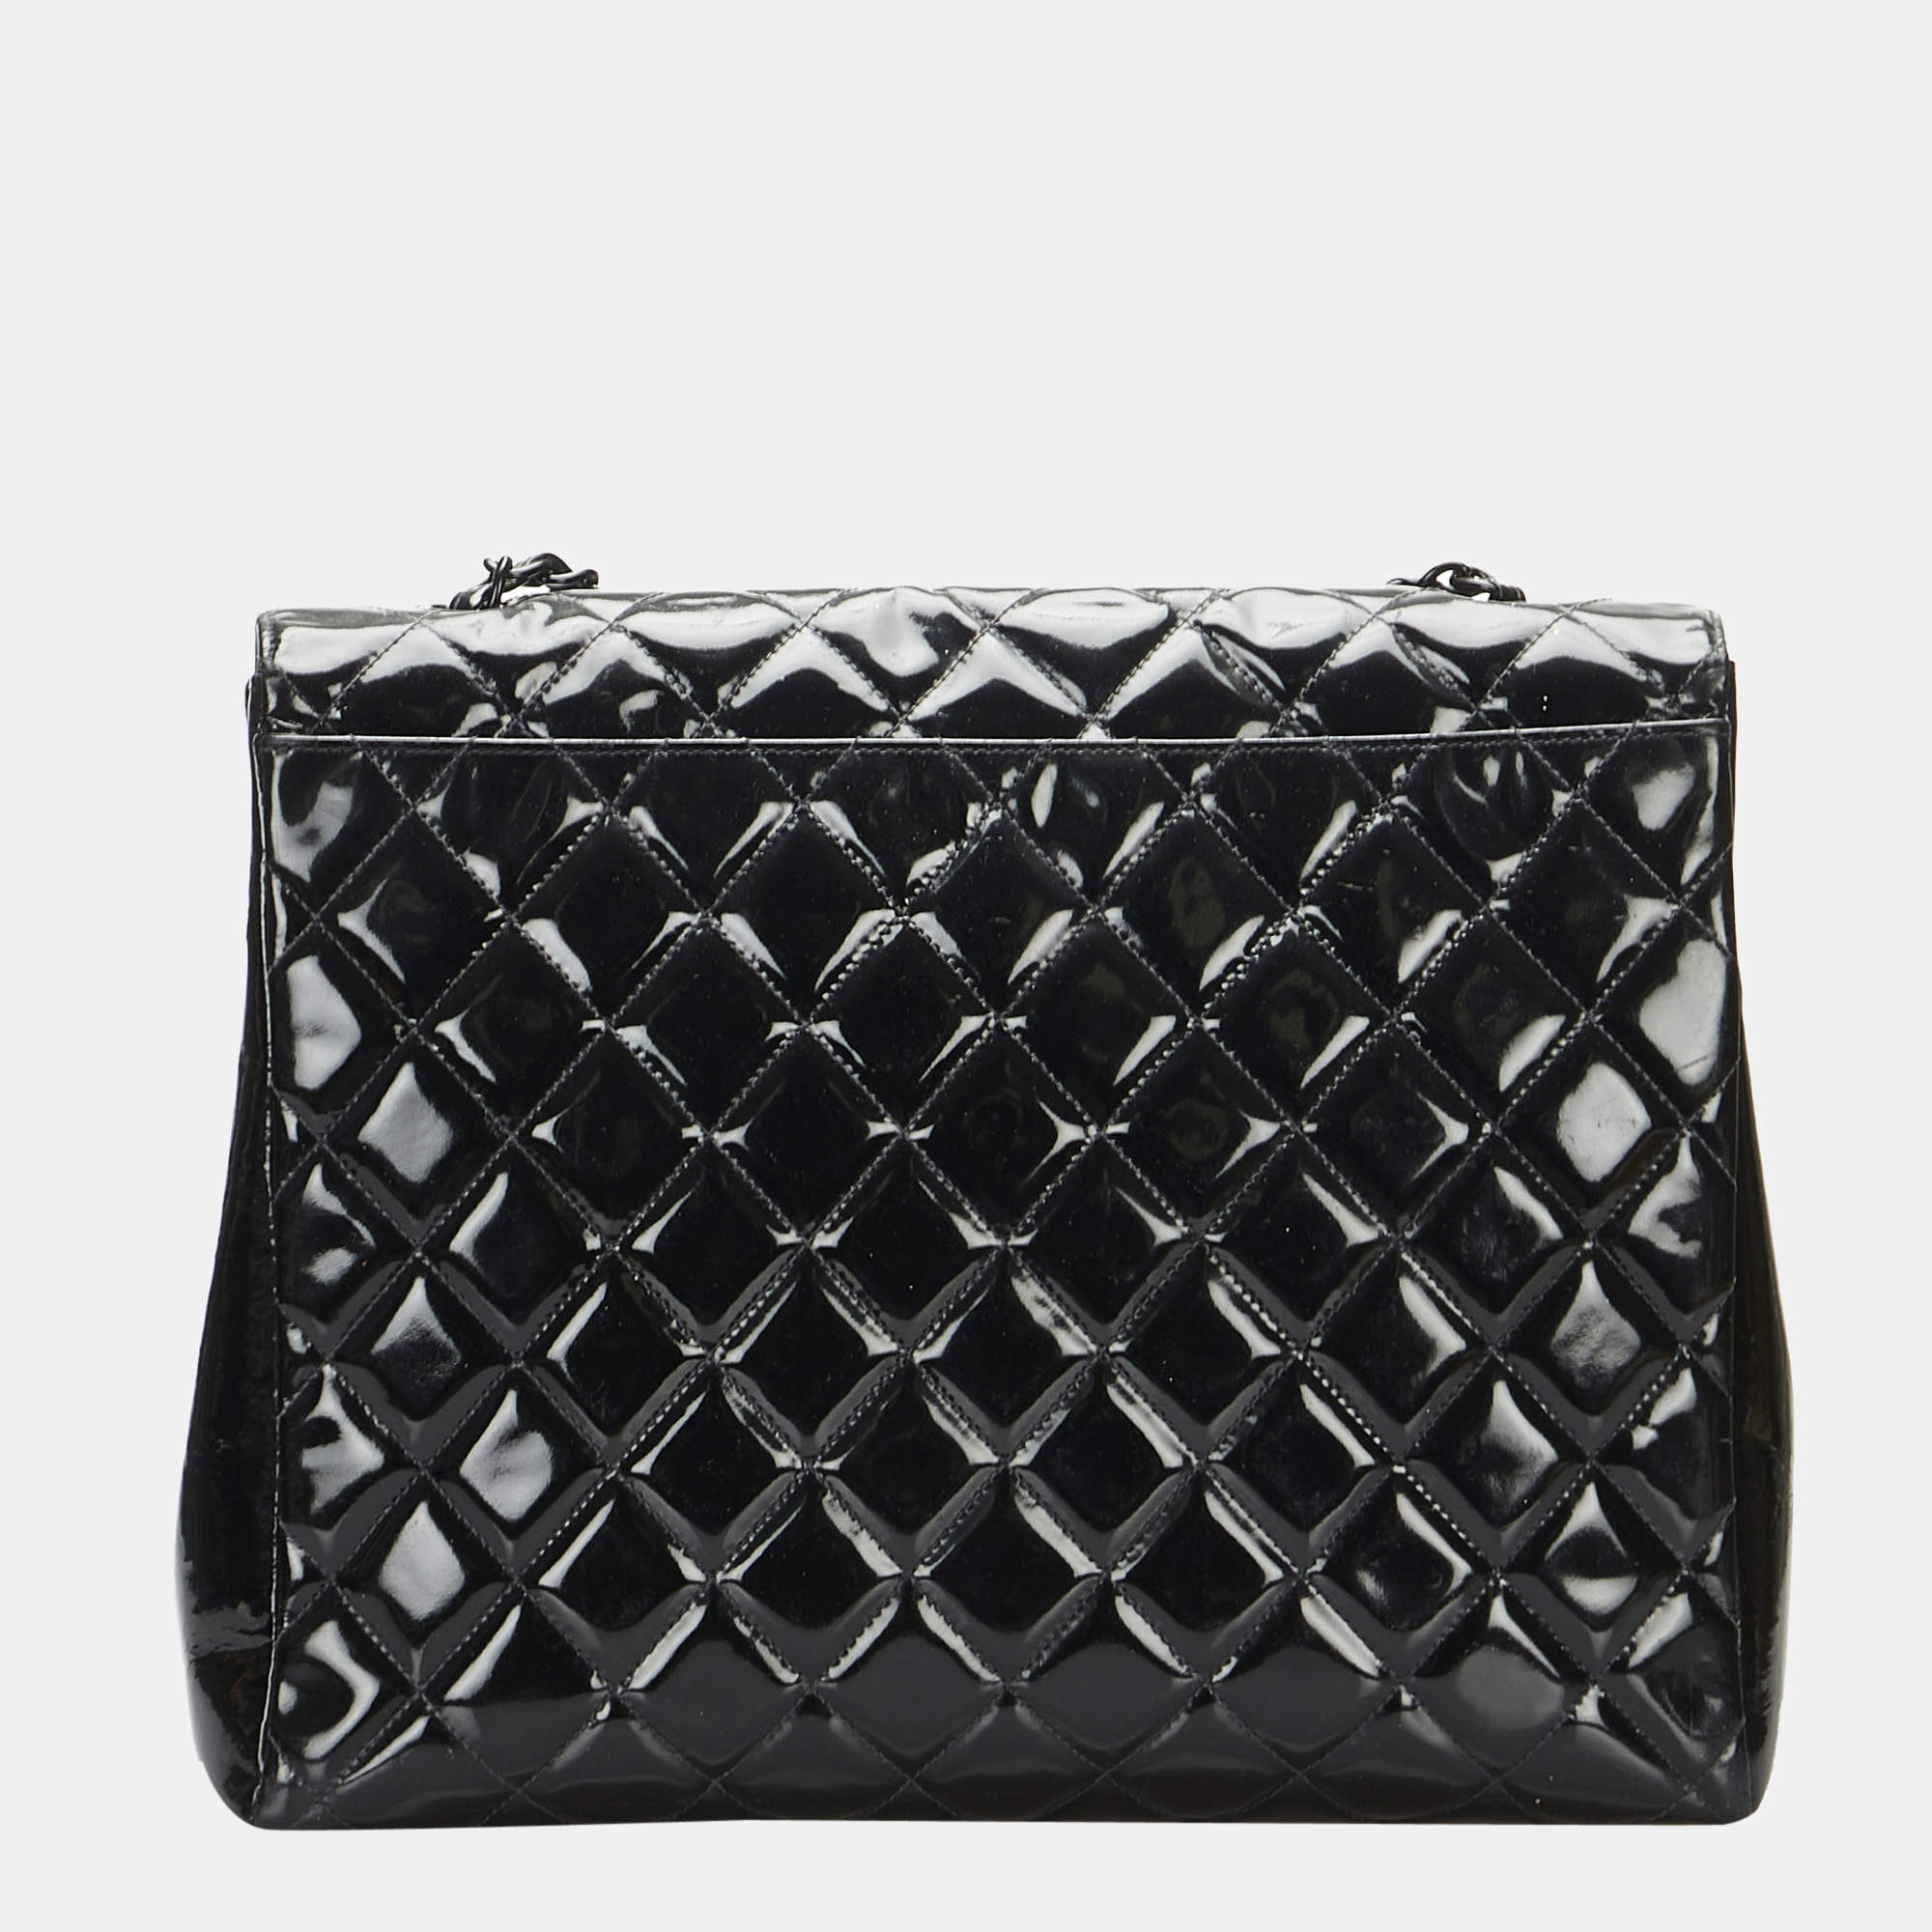 Chanel Black So Black Matelasse Patent Leather Single Flap Bag Chanel